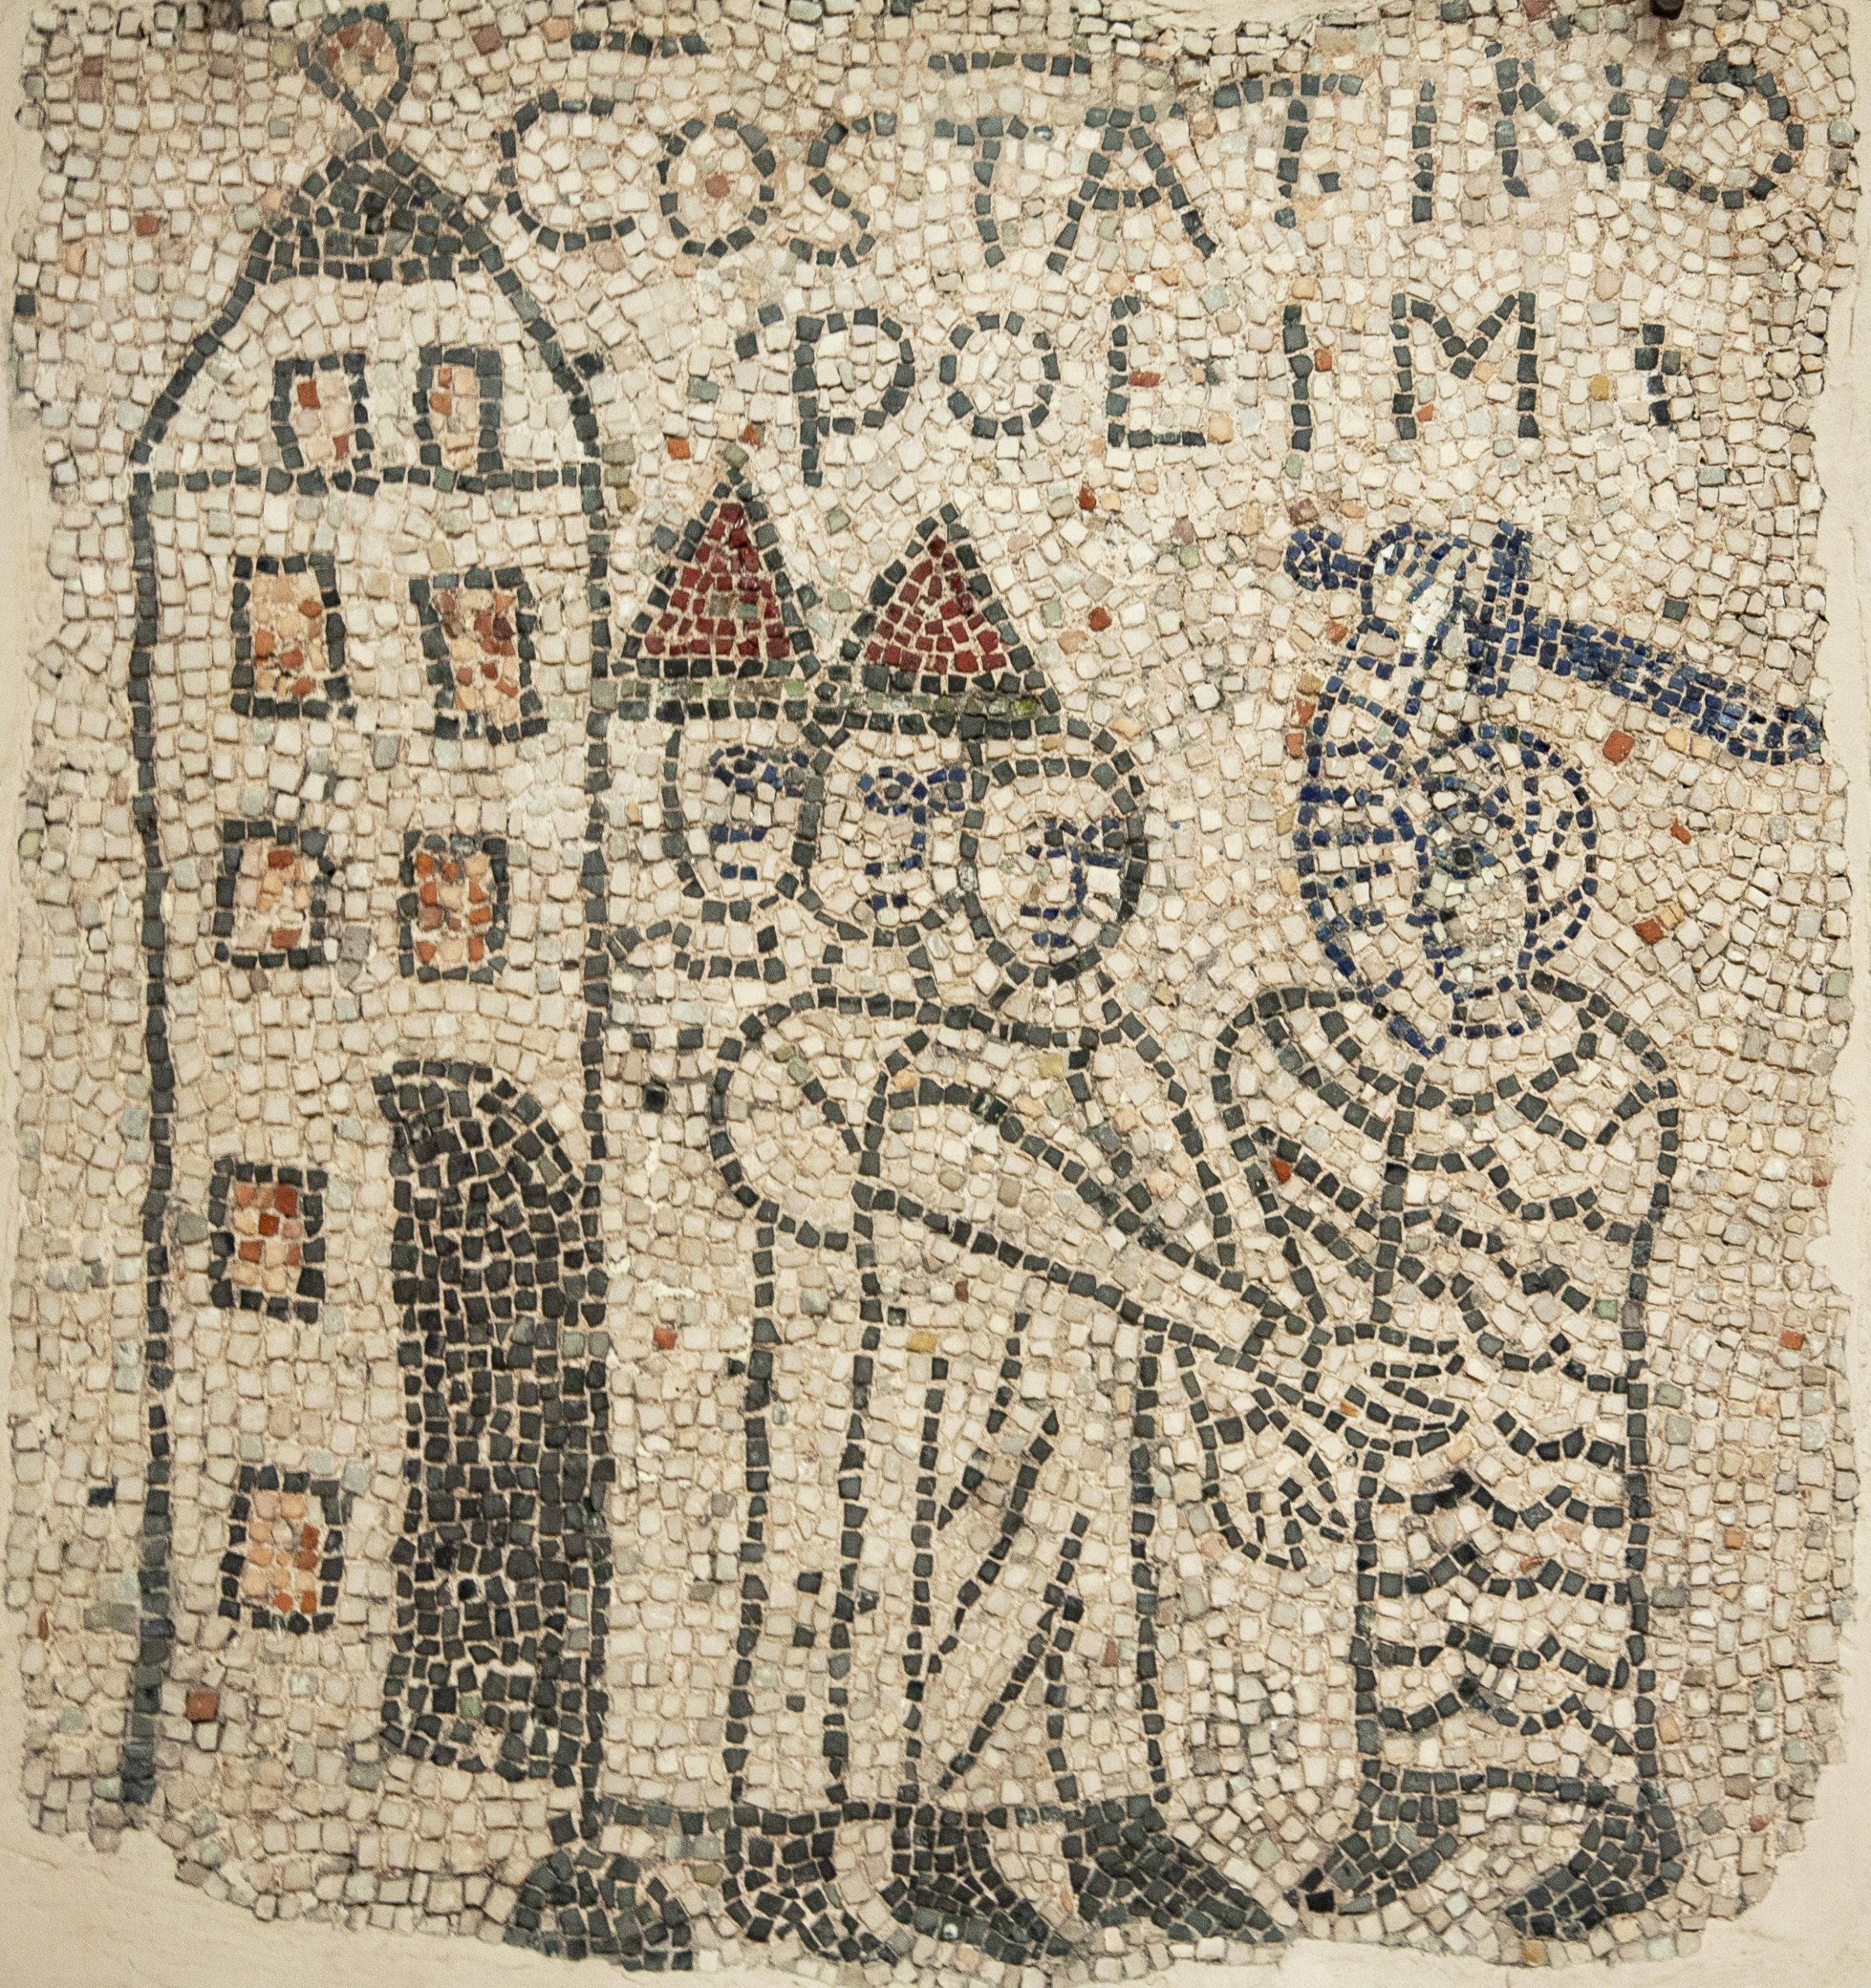 Crusader attacking Constantinople, pavement mosaic, c. 1213, San Giovanni Evangelista, Ravenna (photo: Evan Freeman CC BY-NC-SA 4.0)